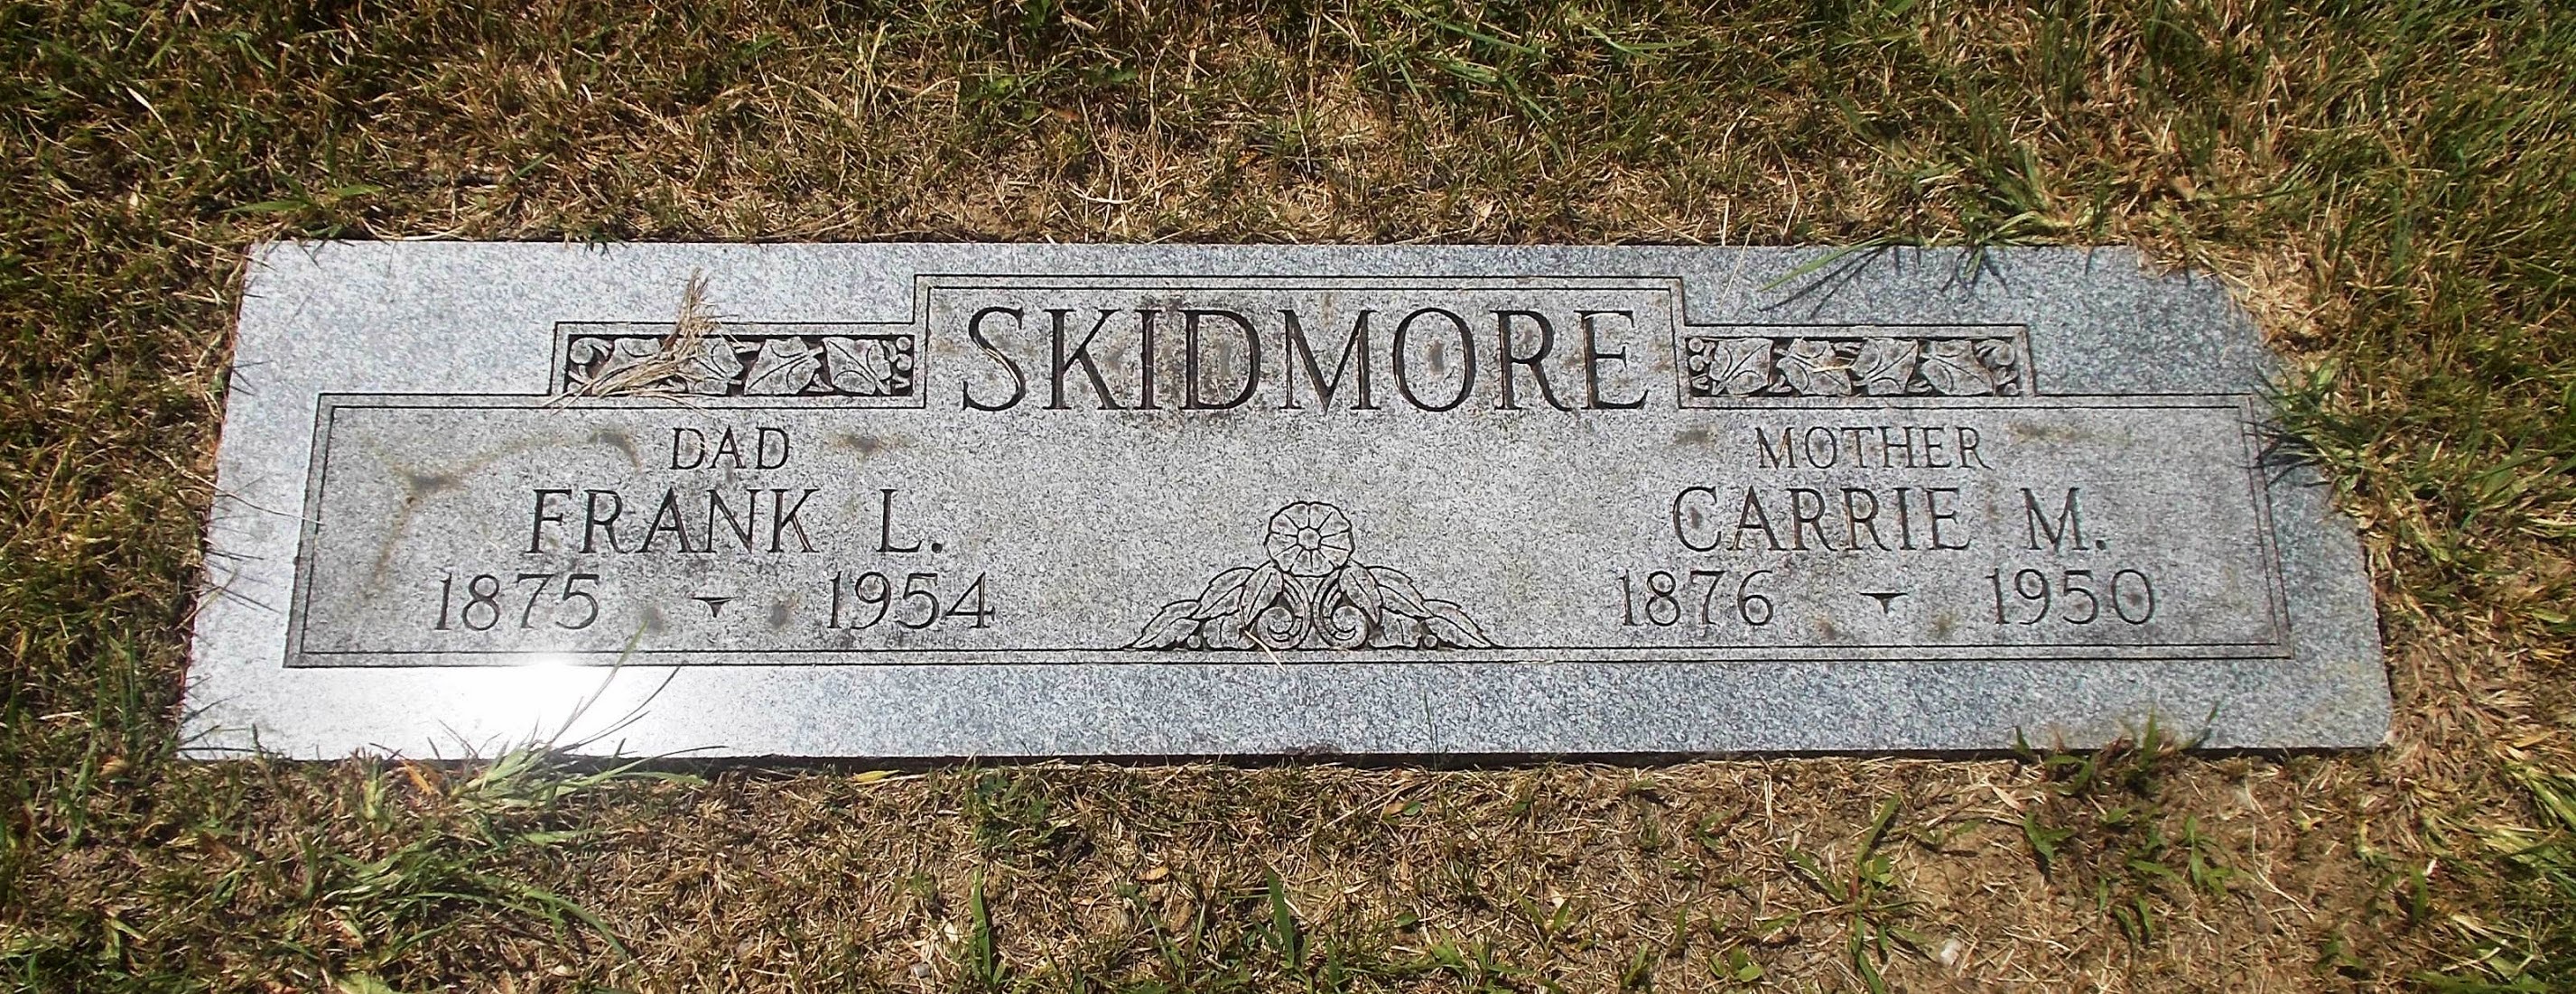 Frank L Skidmore